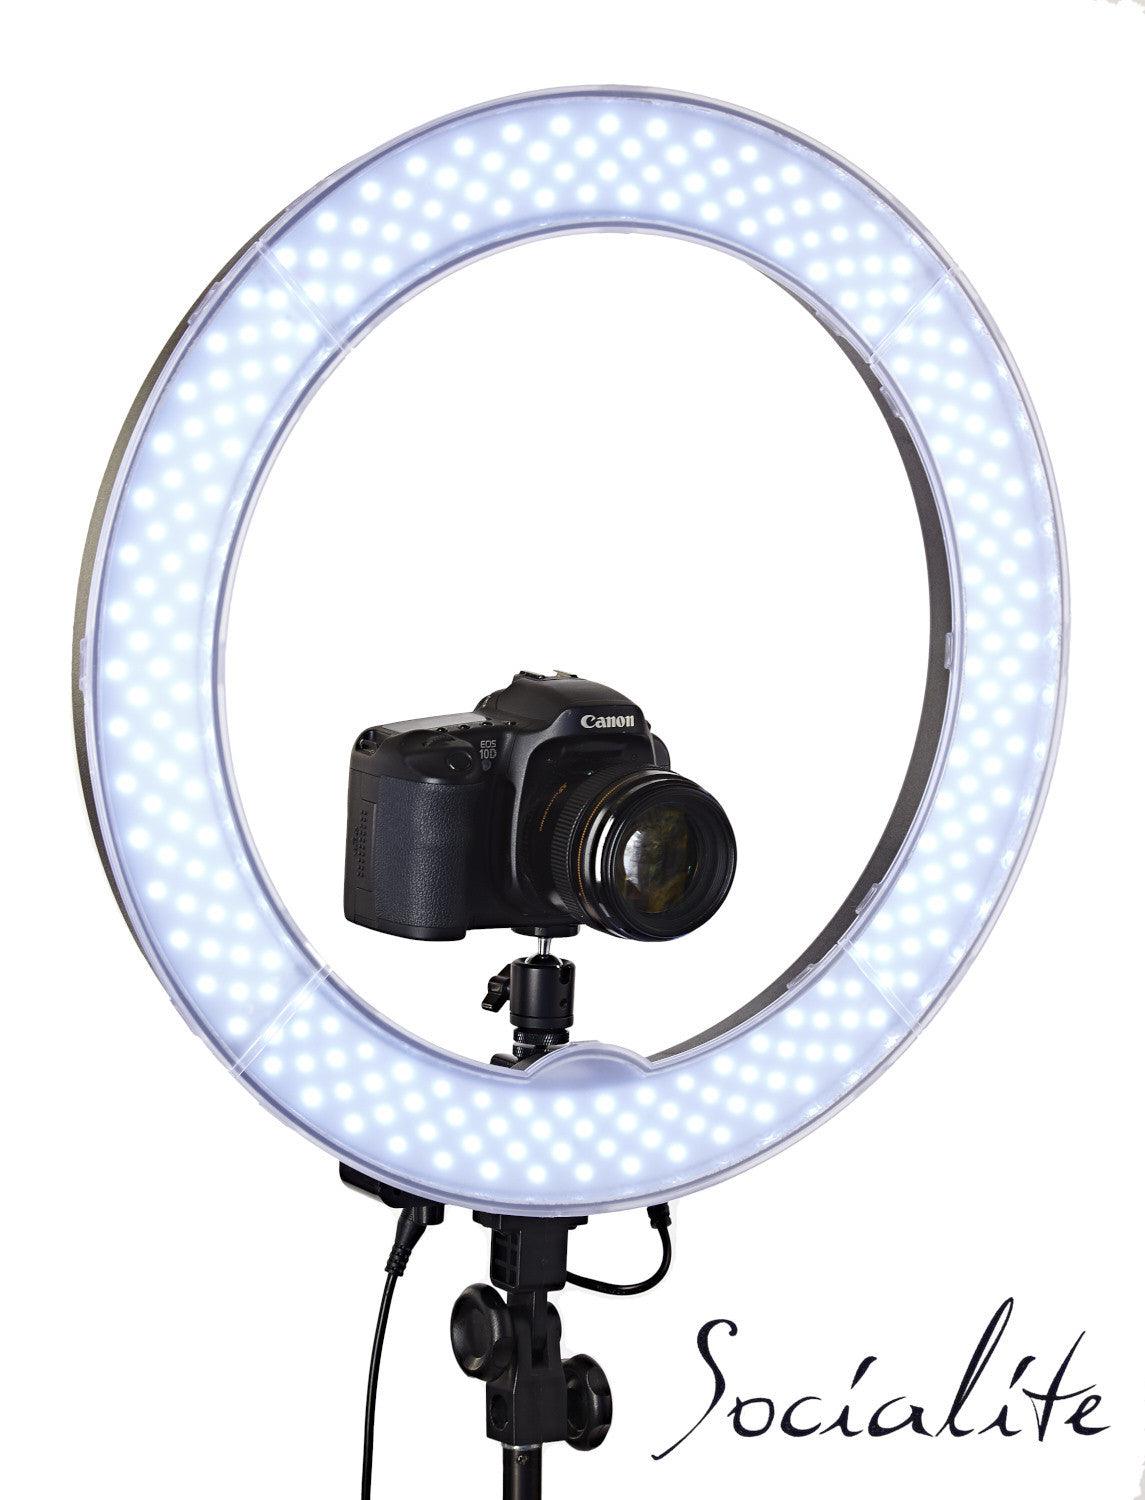 Socialite brand 18 inch ring light with DSLR camera closeup